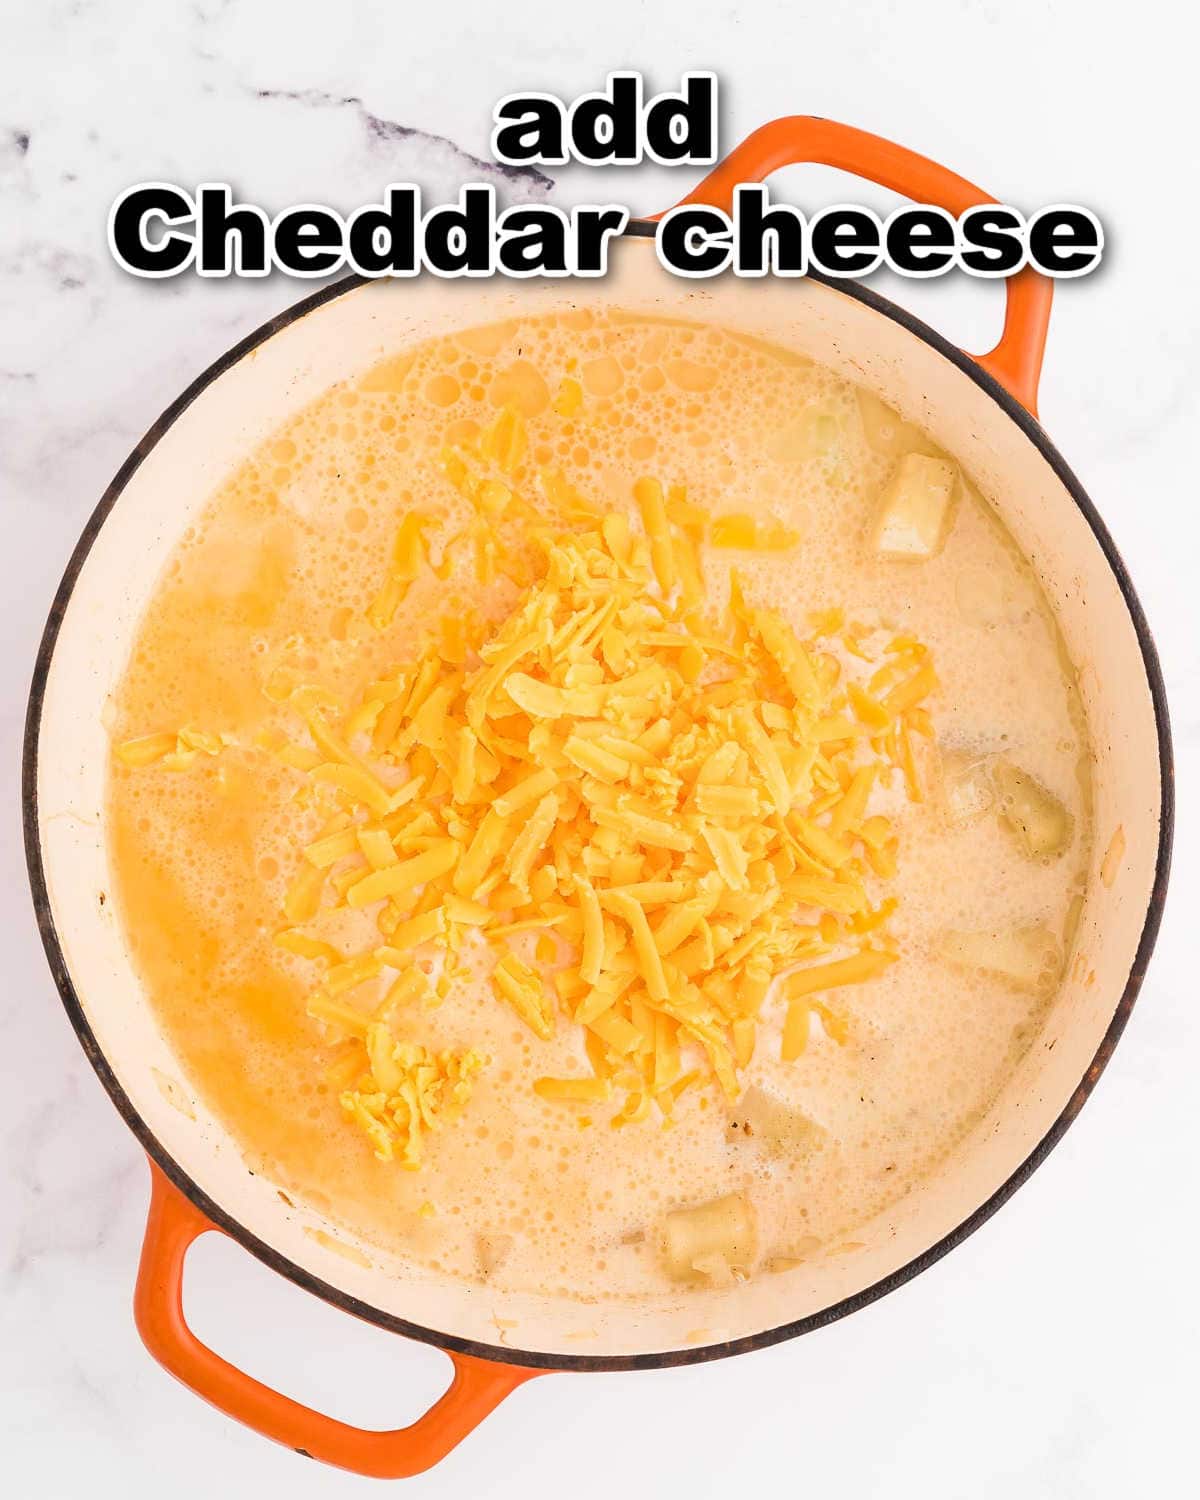 Step: Add cheese.